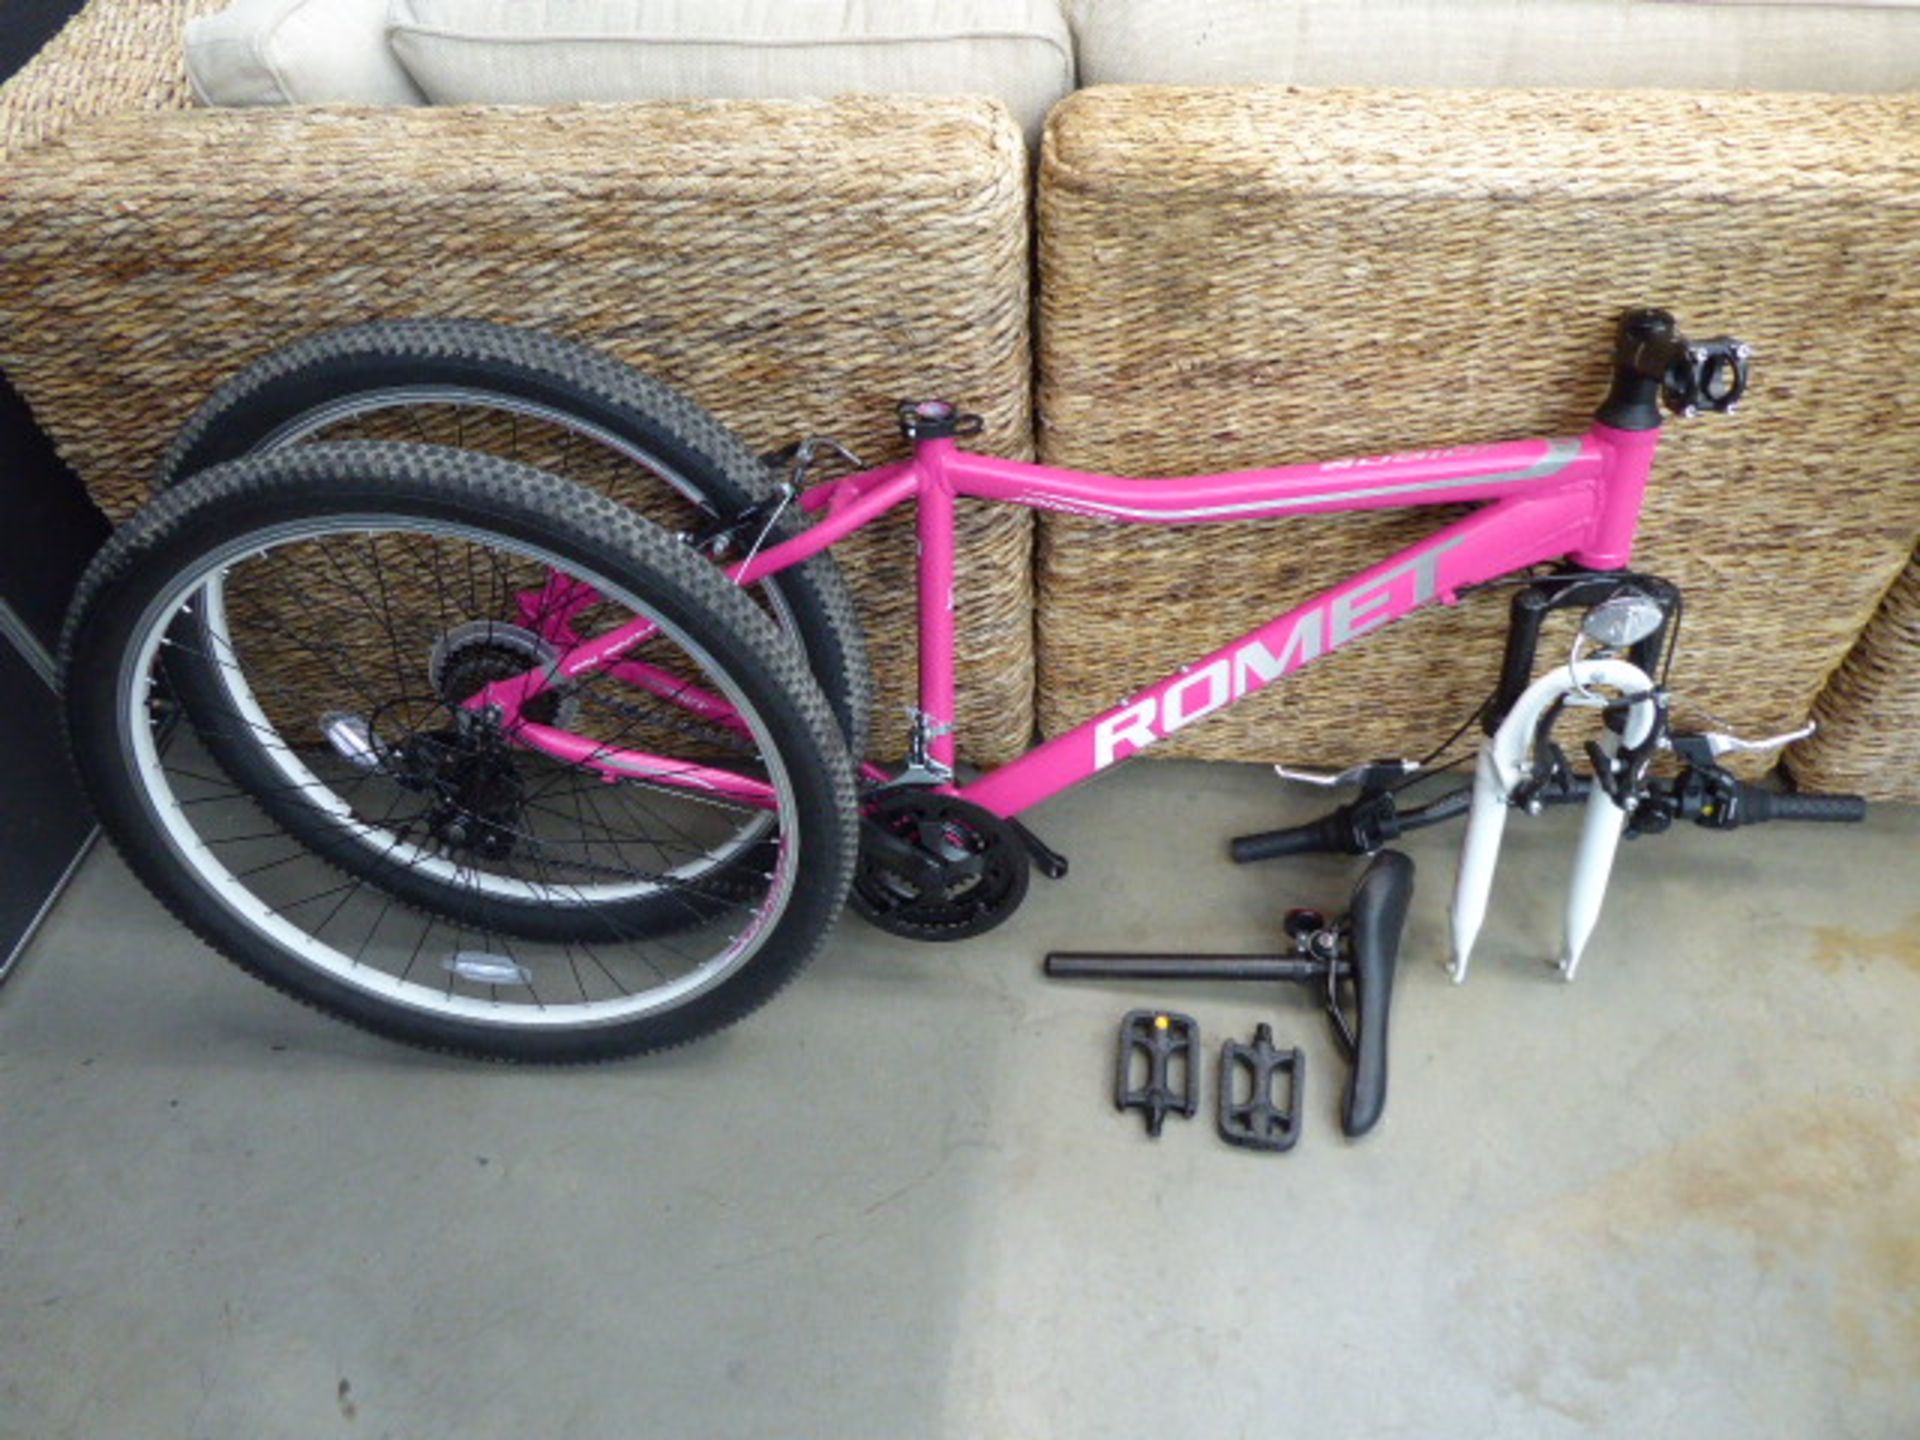 Boxed Romet mountain bike in pink